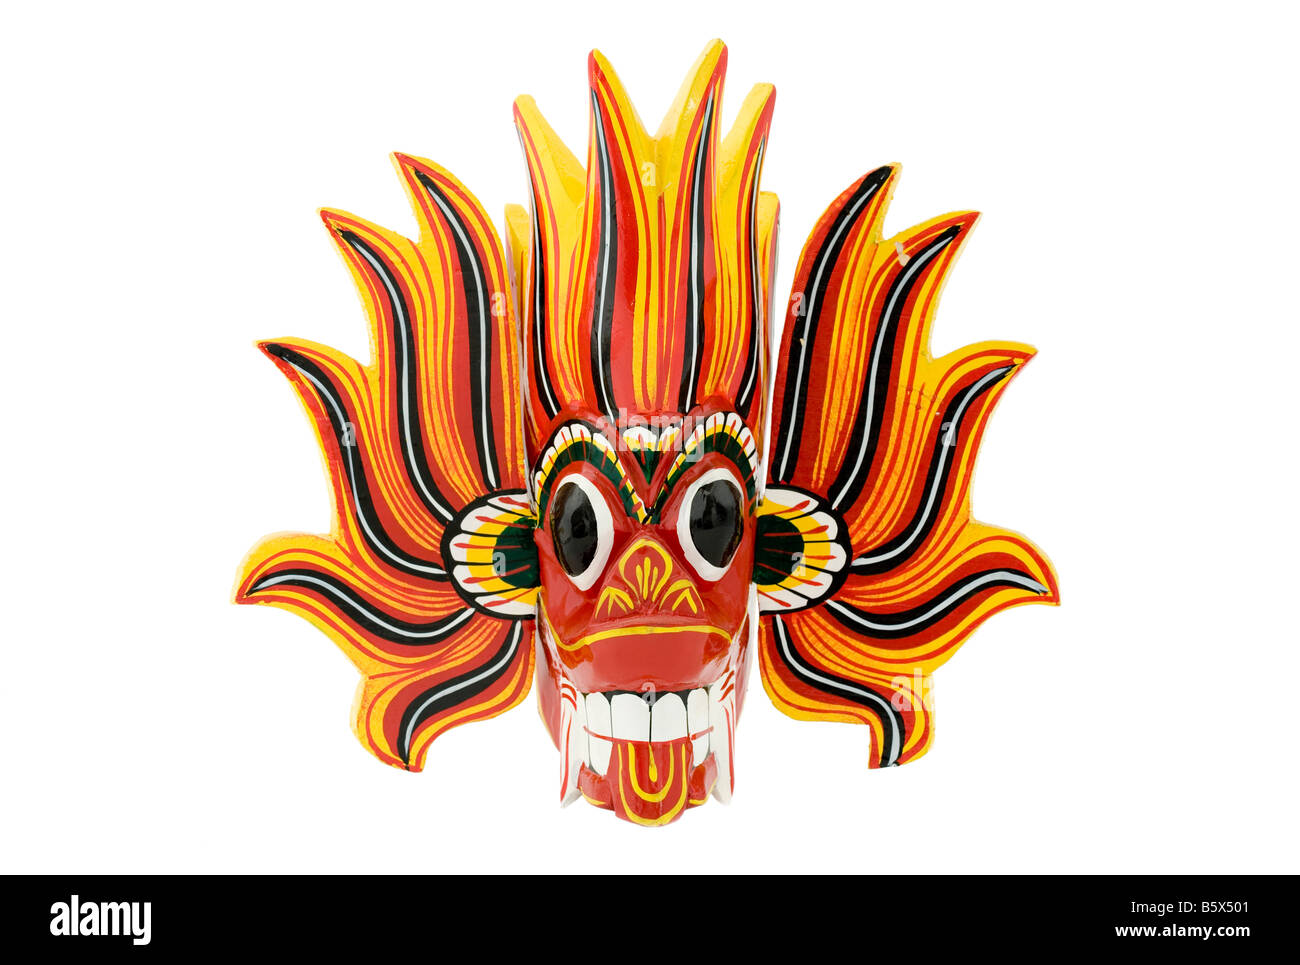 Traditionelle Masken aus Sri Lanka Stockfotografie - Alamy